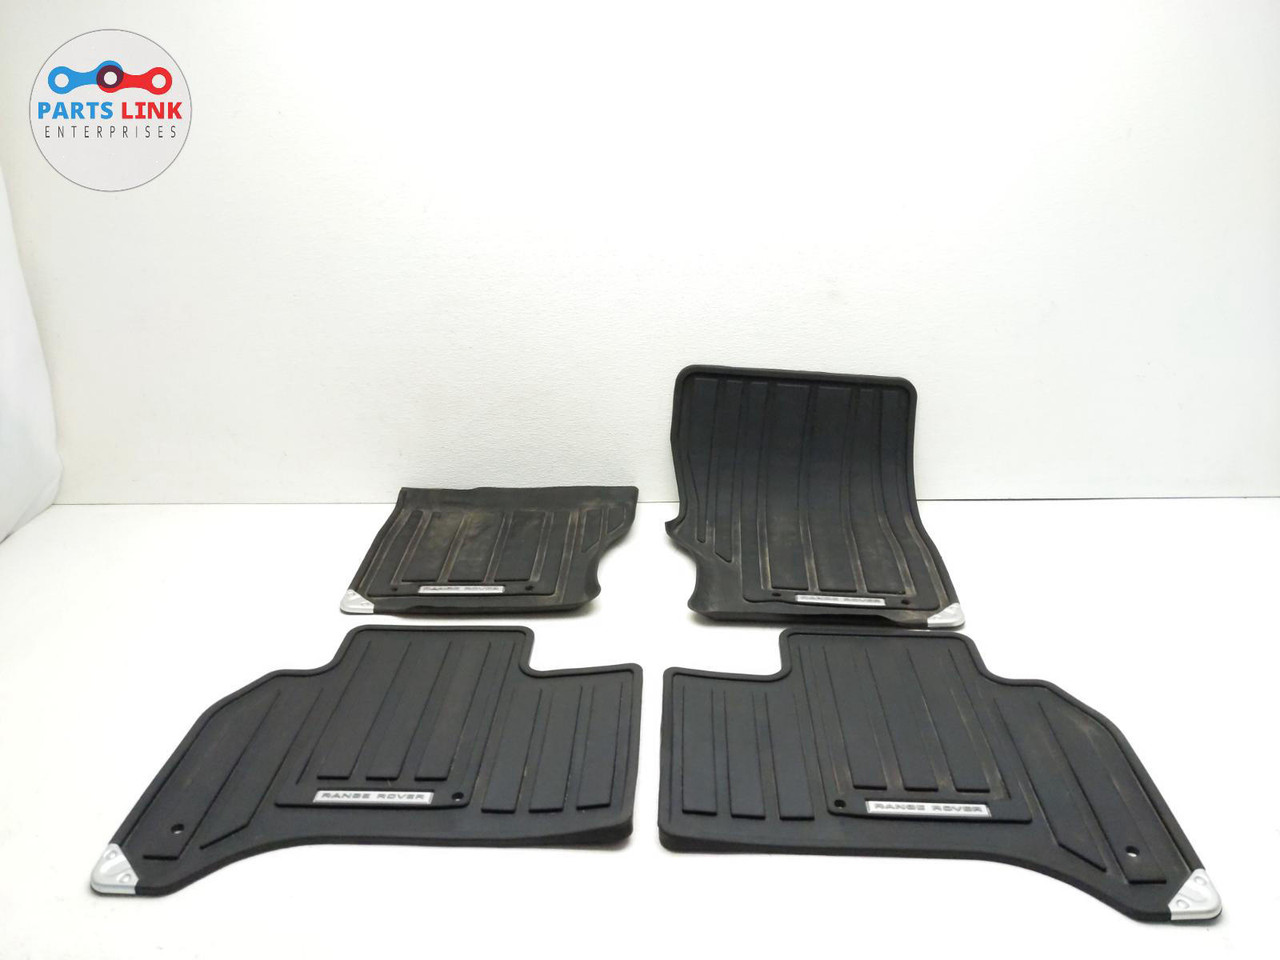 Range Rover Rubber Floor Mats - Front And Rear Mats, Black